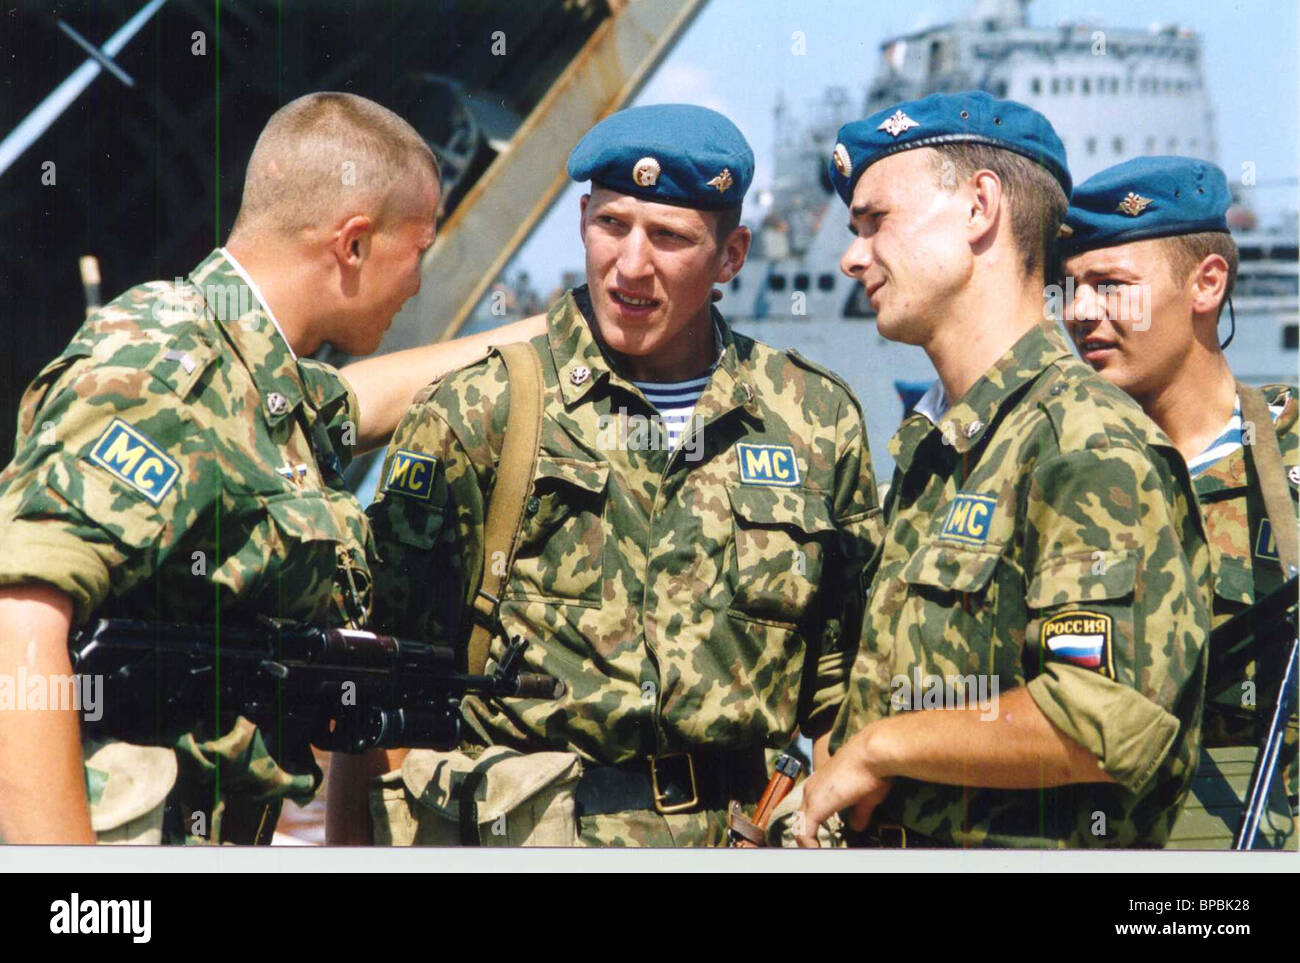 he-russian-peacekeepers-to-kosovo-BPBK28.jpg